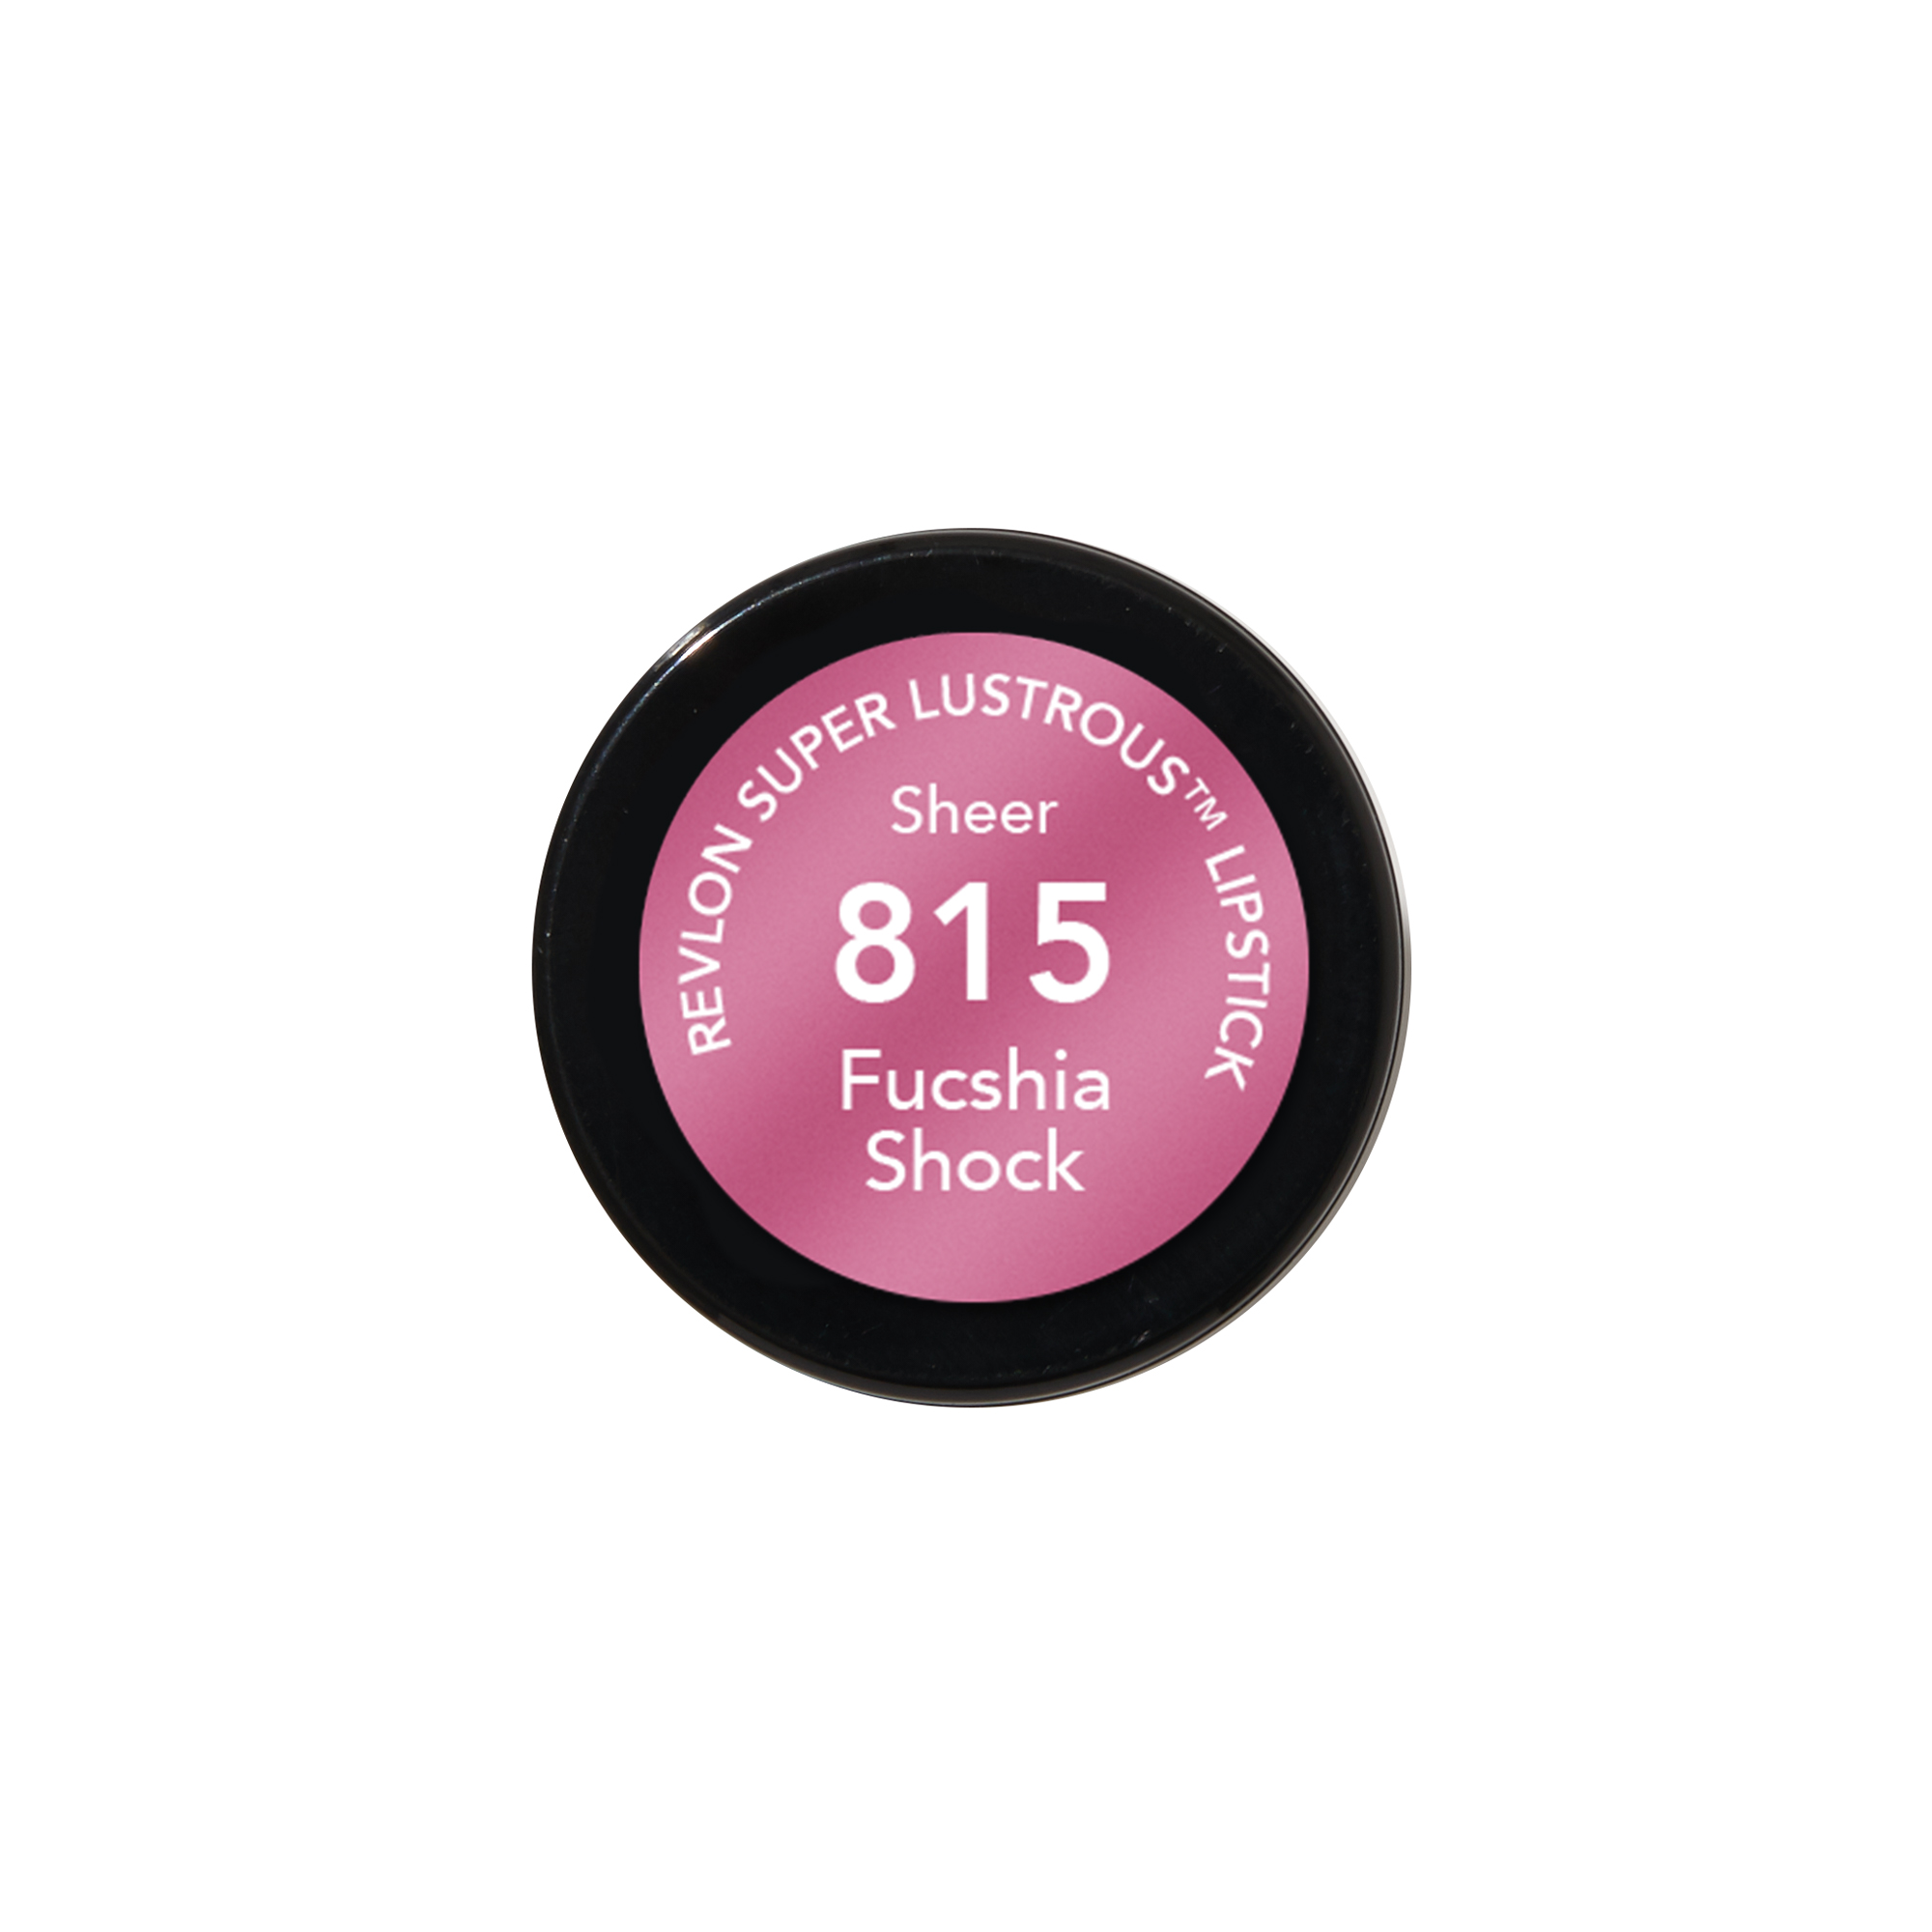 Revlon Super Lustrous Lipstick, Fuchsia Shock - image 4 of 7